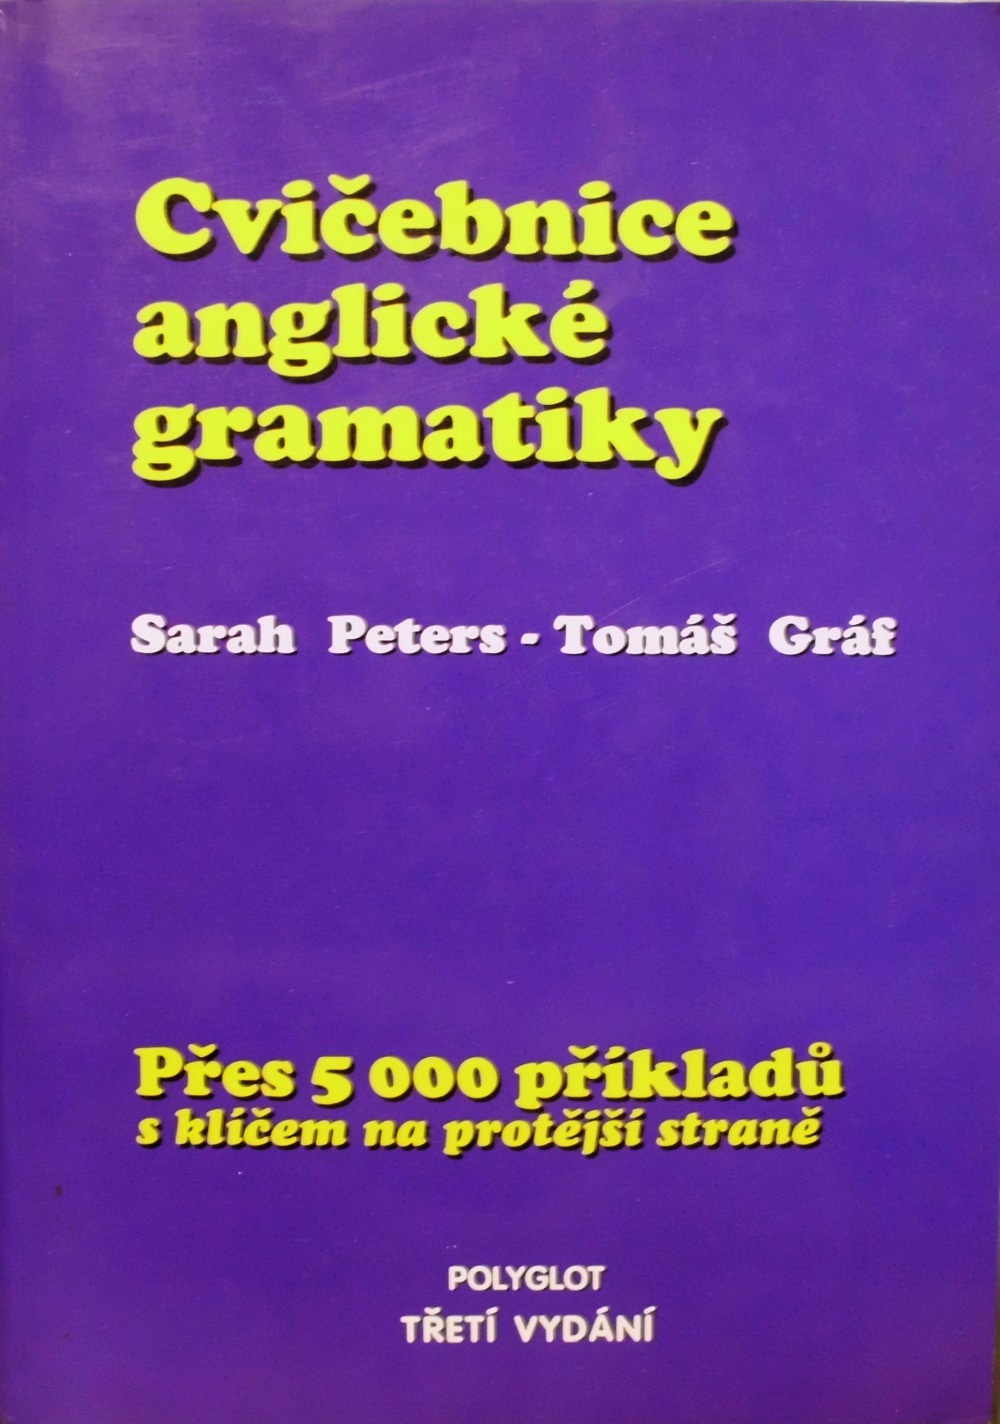 Cvicebnice anglicke gramatiky pdf to excel converter